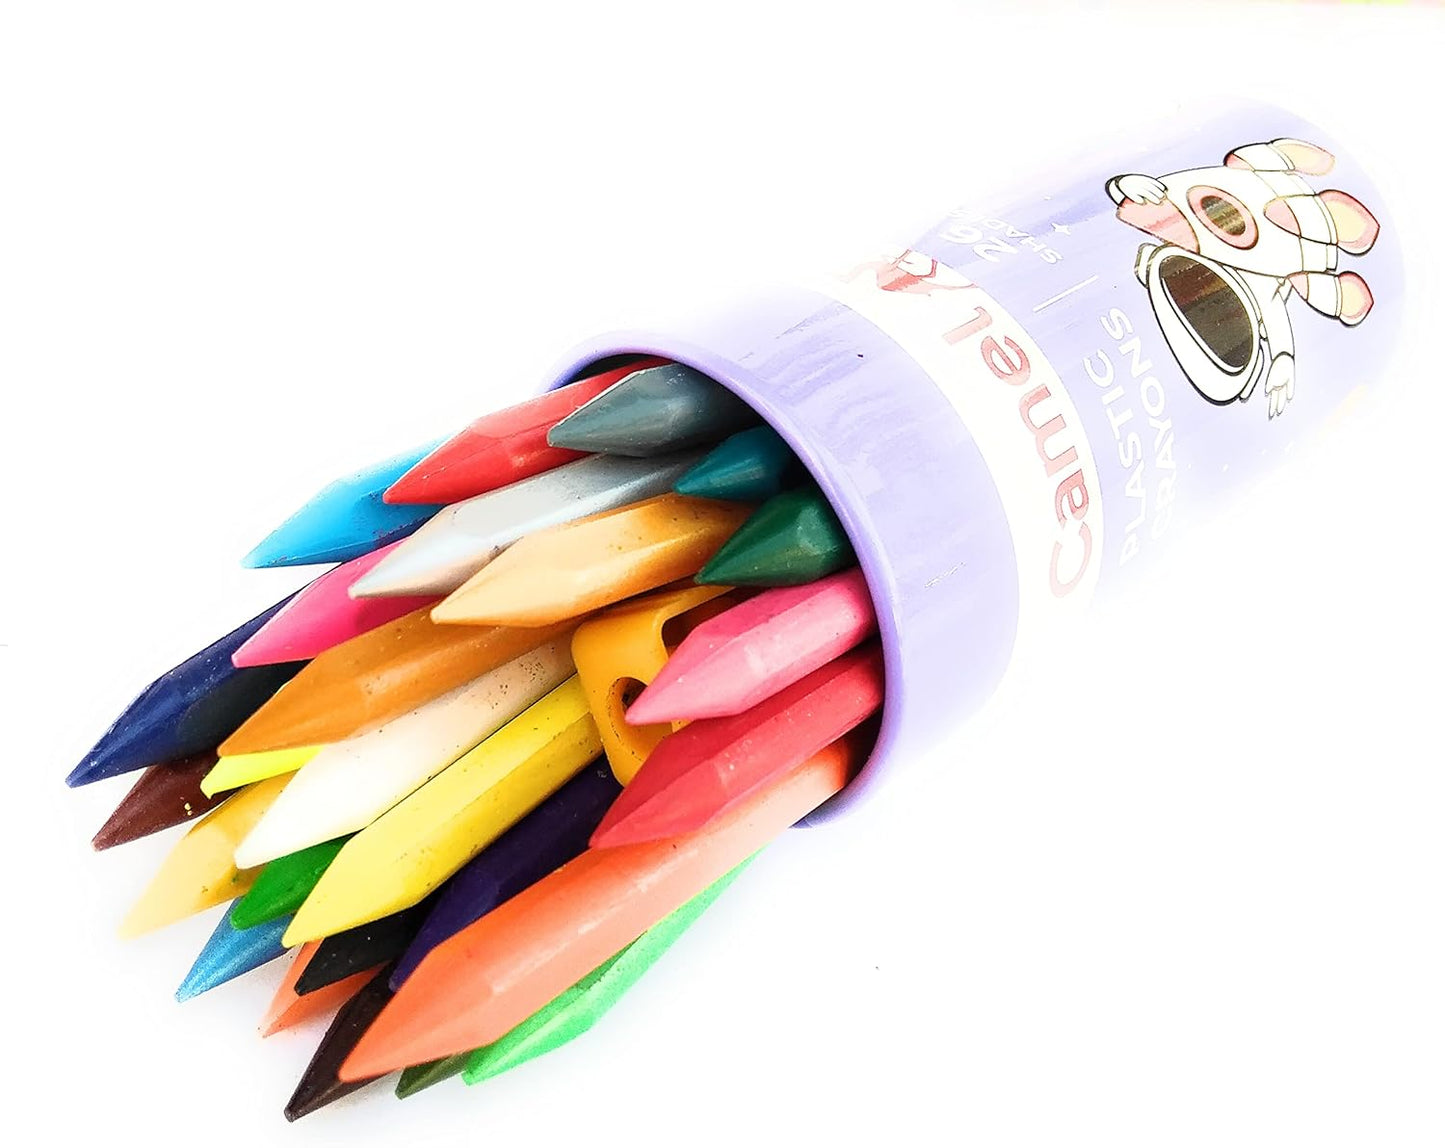 Plastic Crayons | Camlin | 26 Shades | Extra Smooth & More Bright